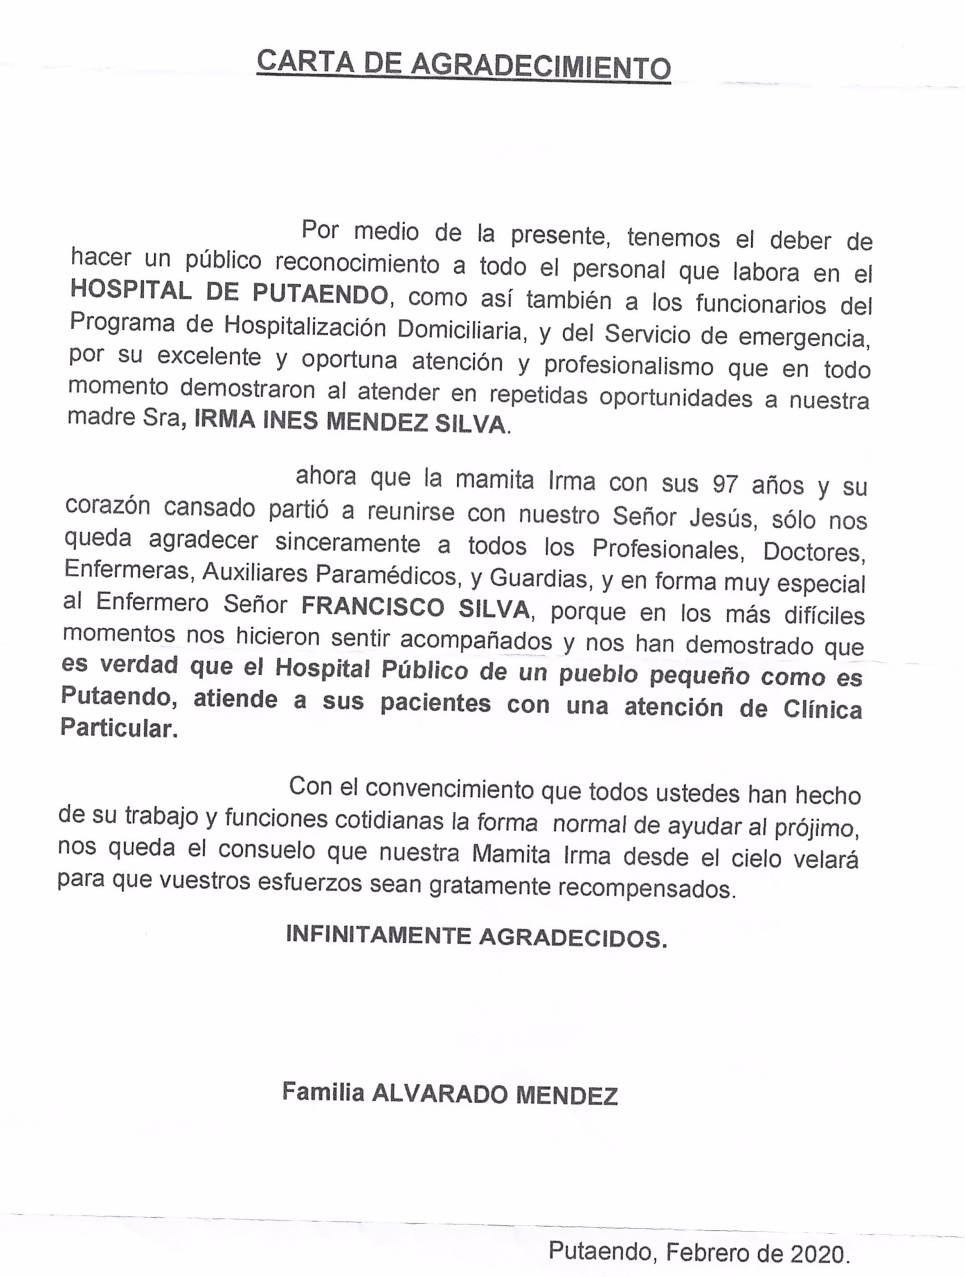 Carta agradecimiento Familia Alvarado_page-0001.jpg